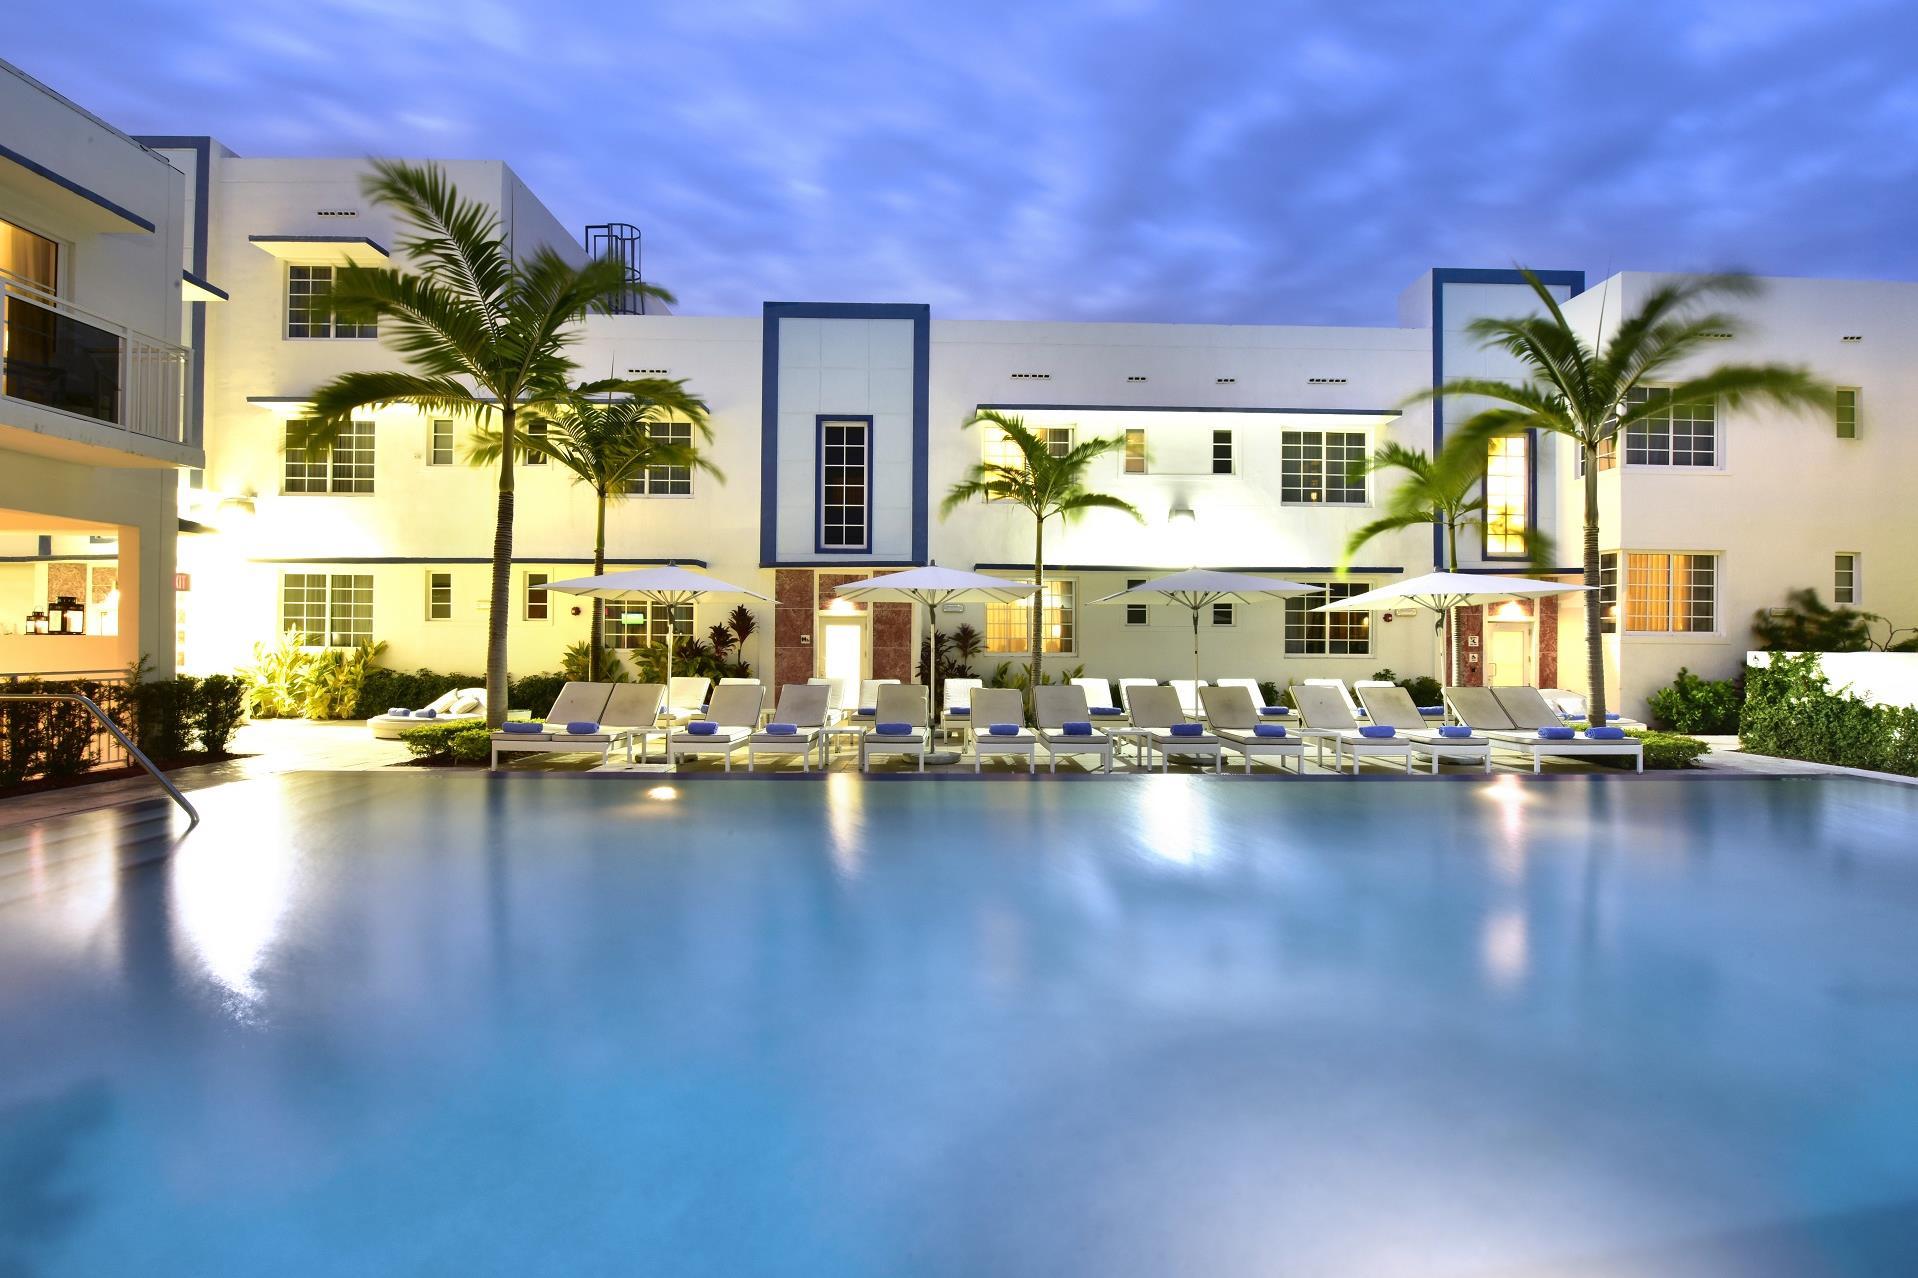 Pestana South Beach Art Deco Hotel in Miami Beach, FL